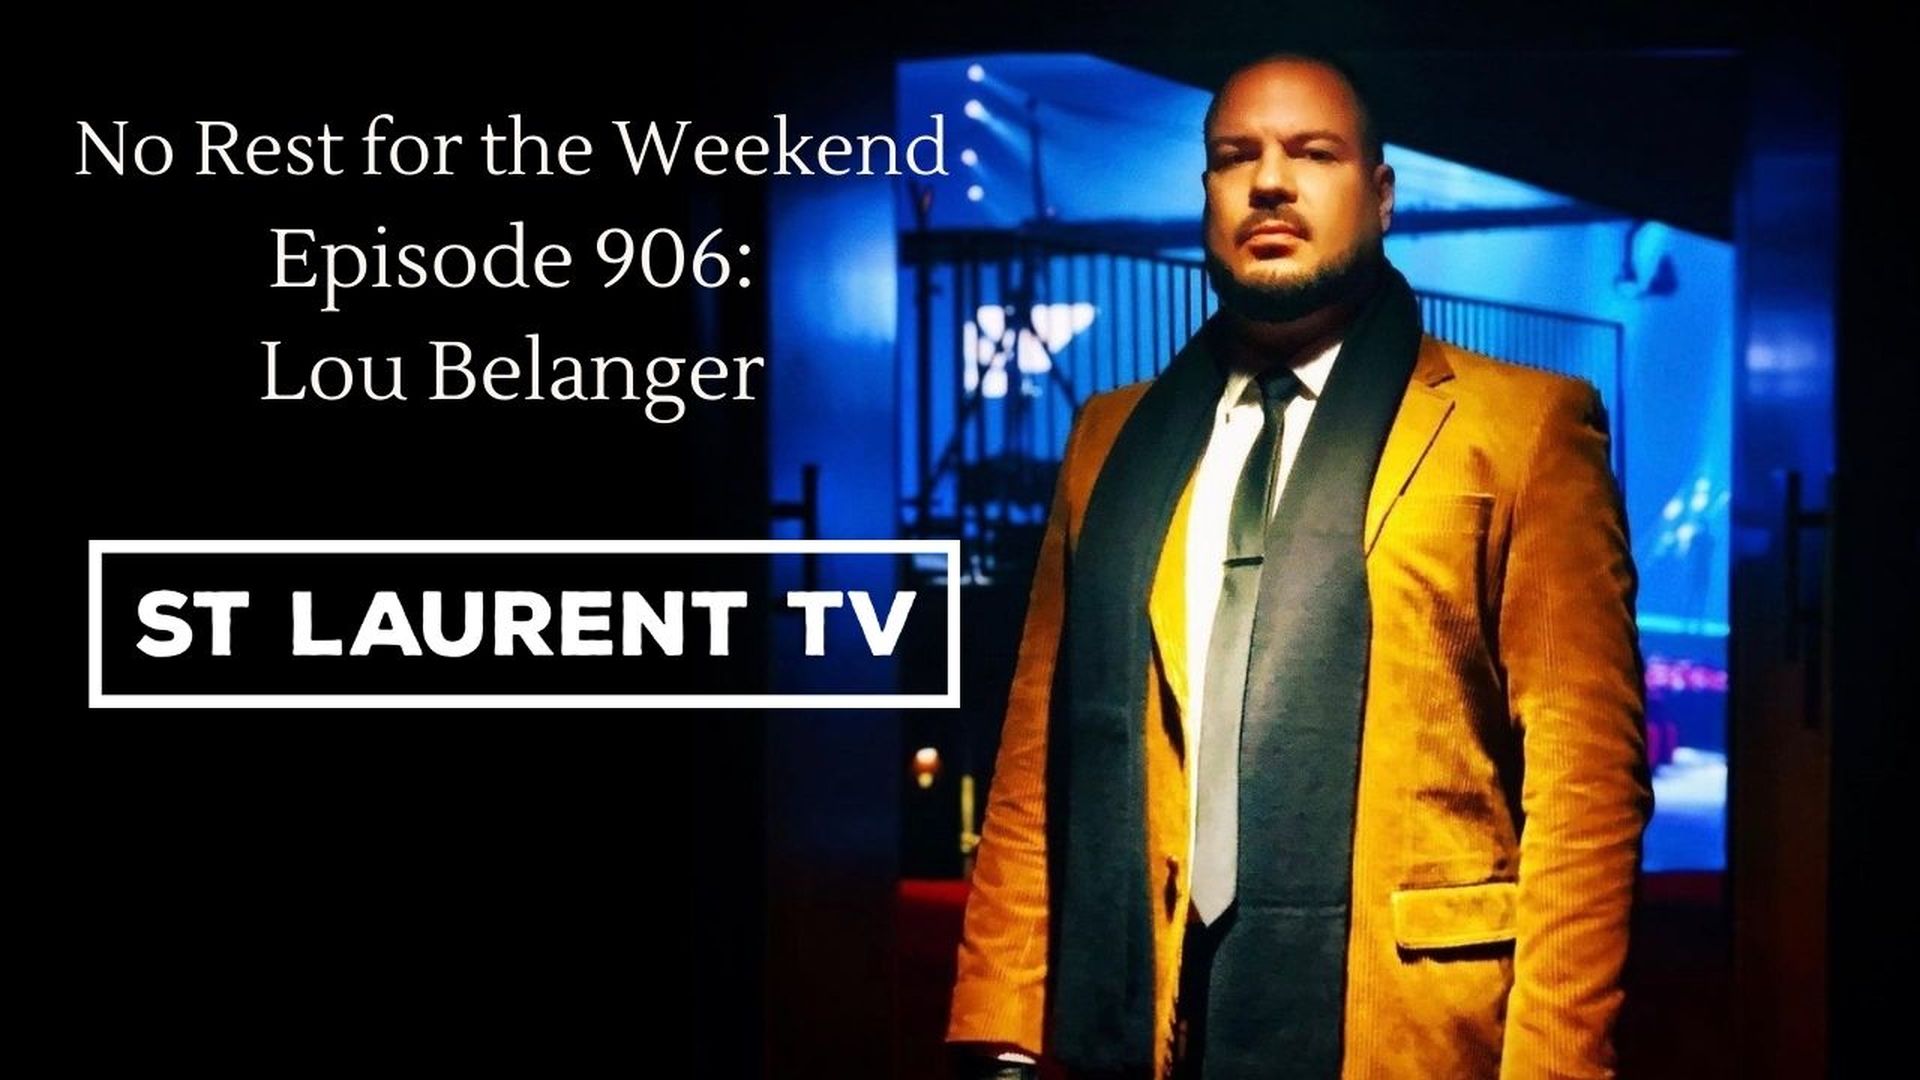 Episode 906: Lou Belanger and St Lauren TV